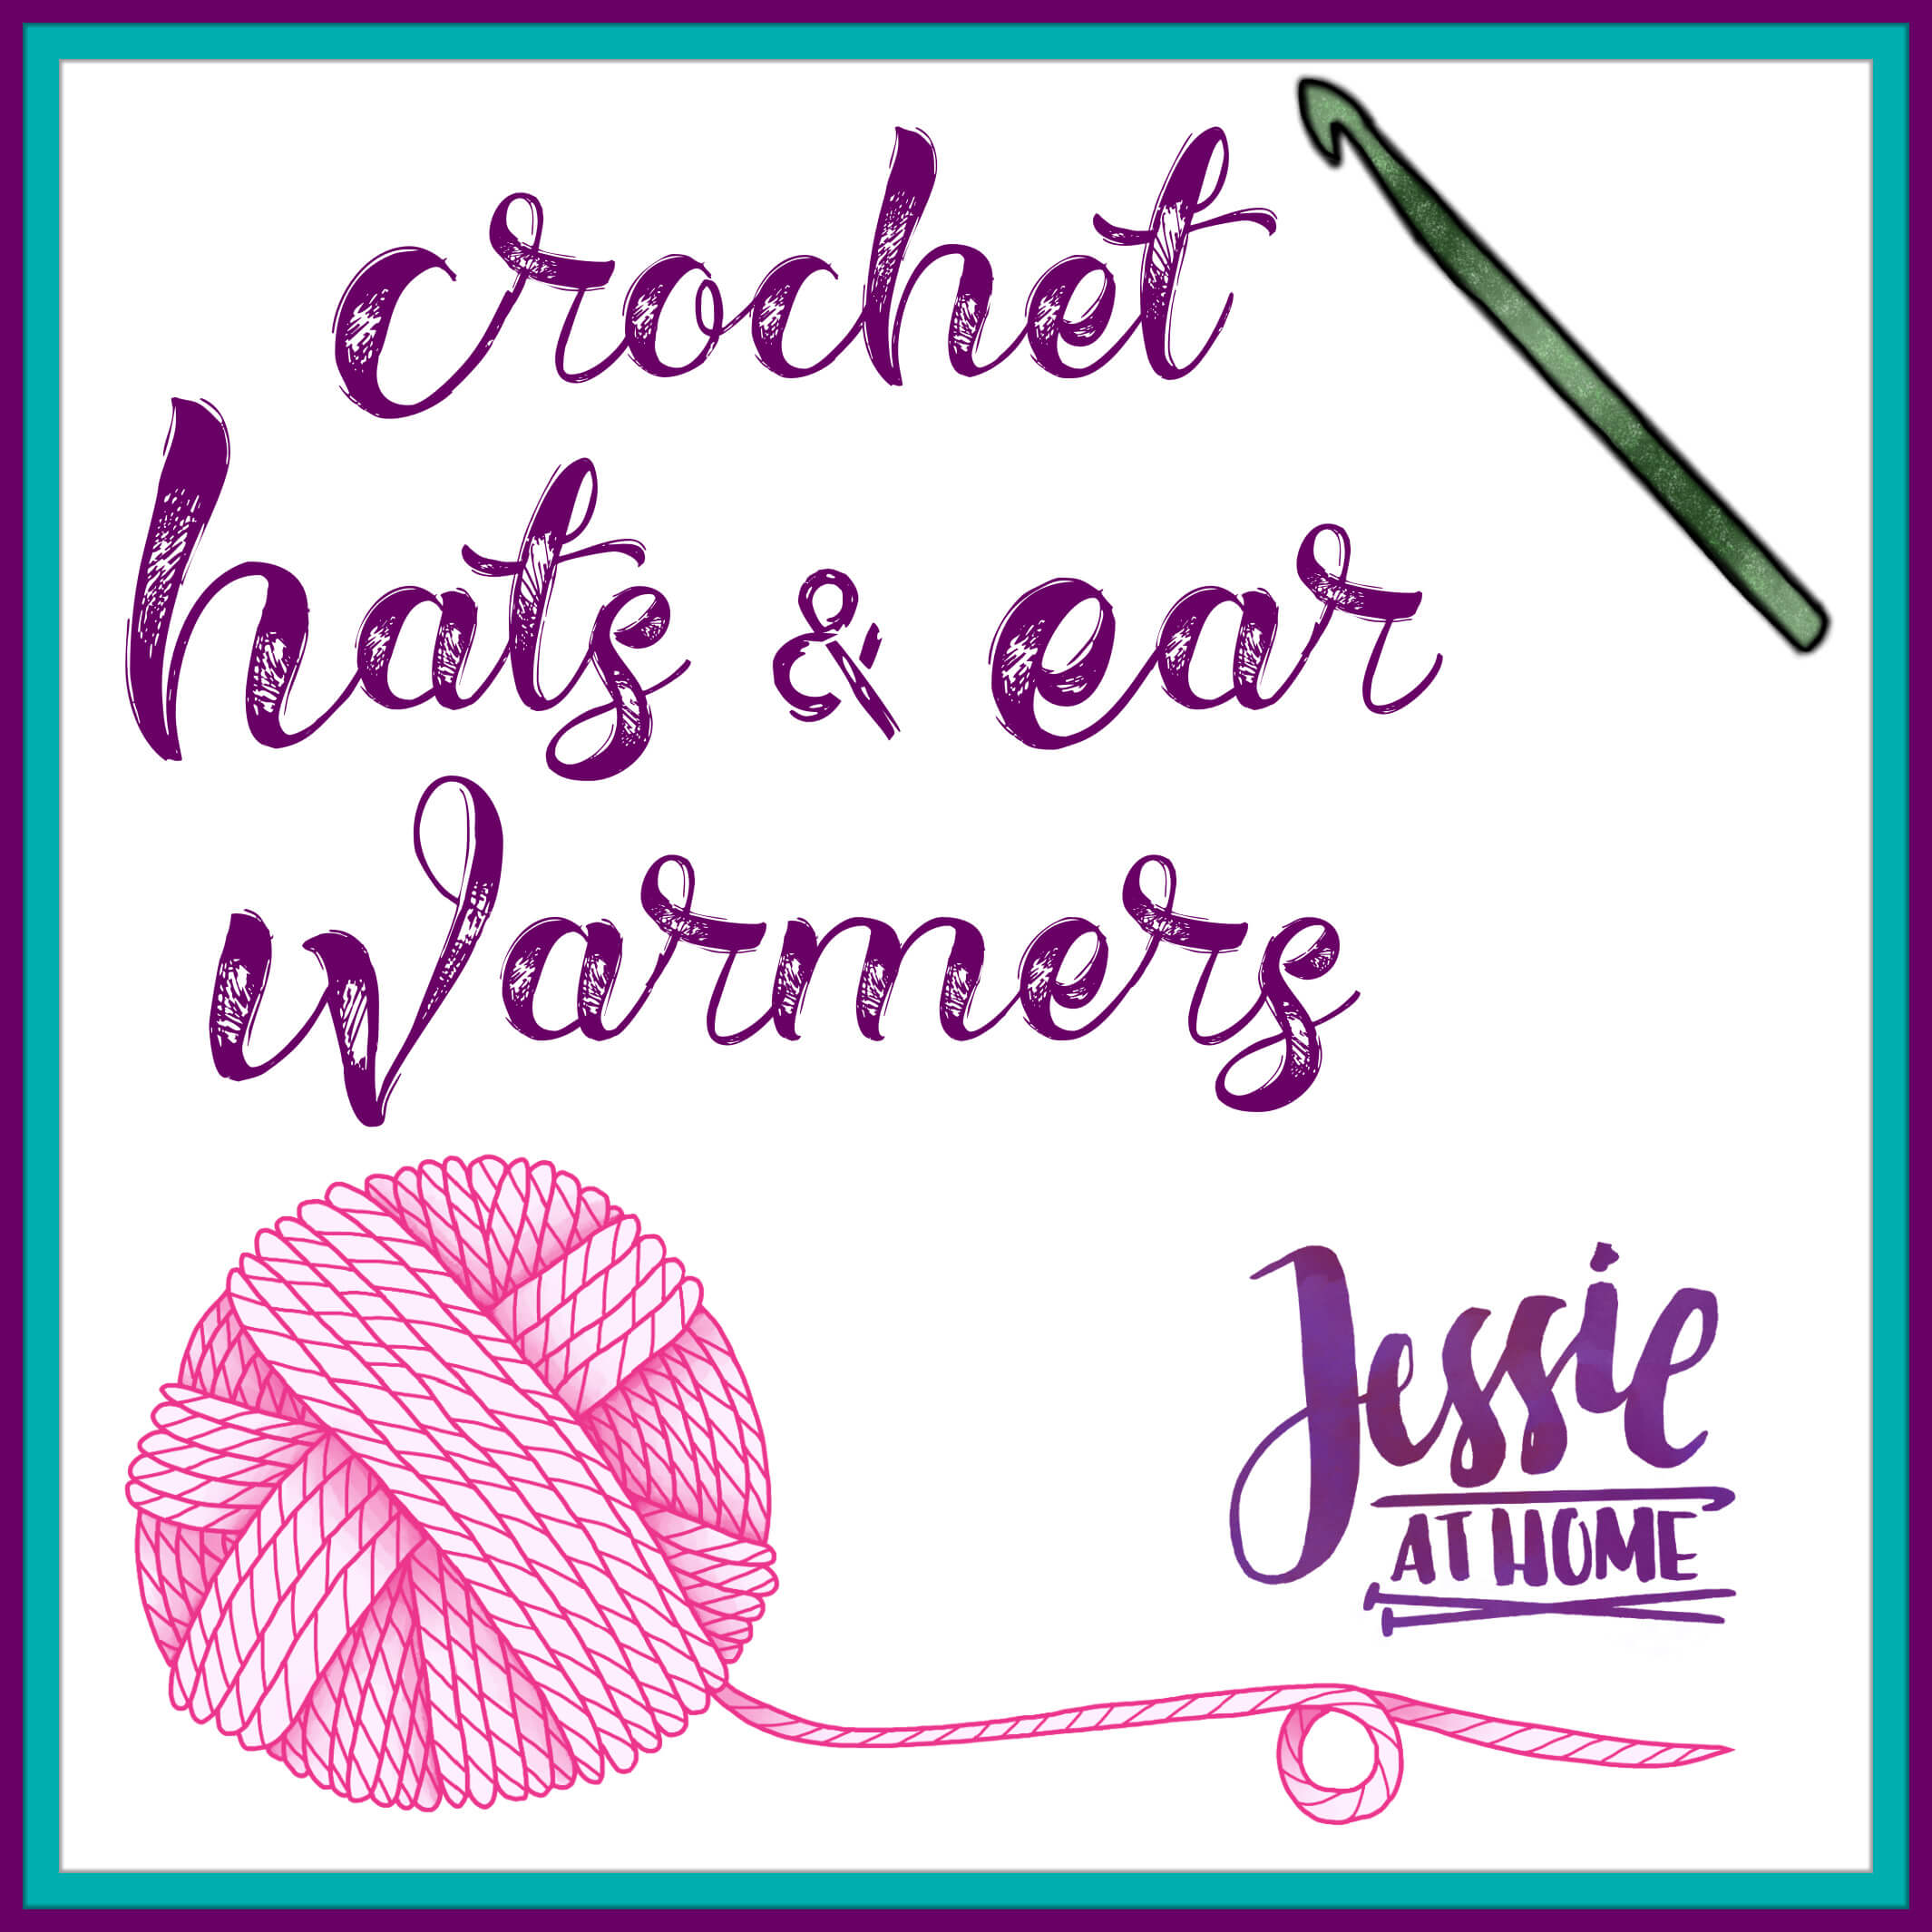 Crochet Hats & Ear Warmers Menu on Jessie At Home